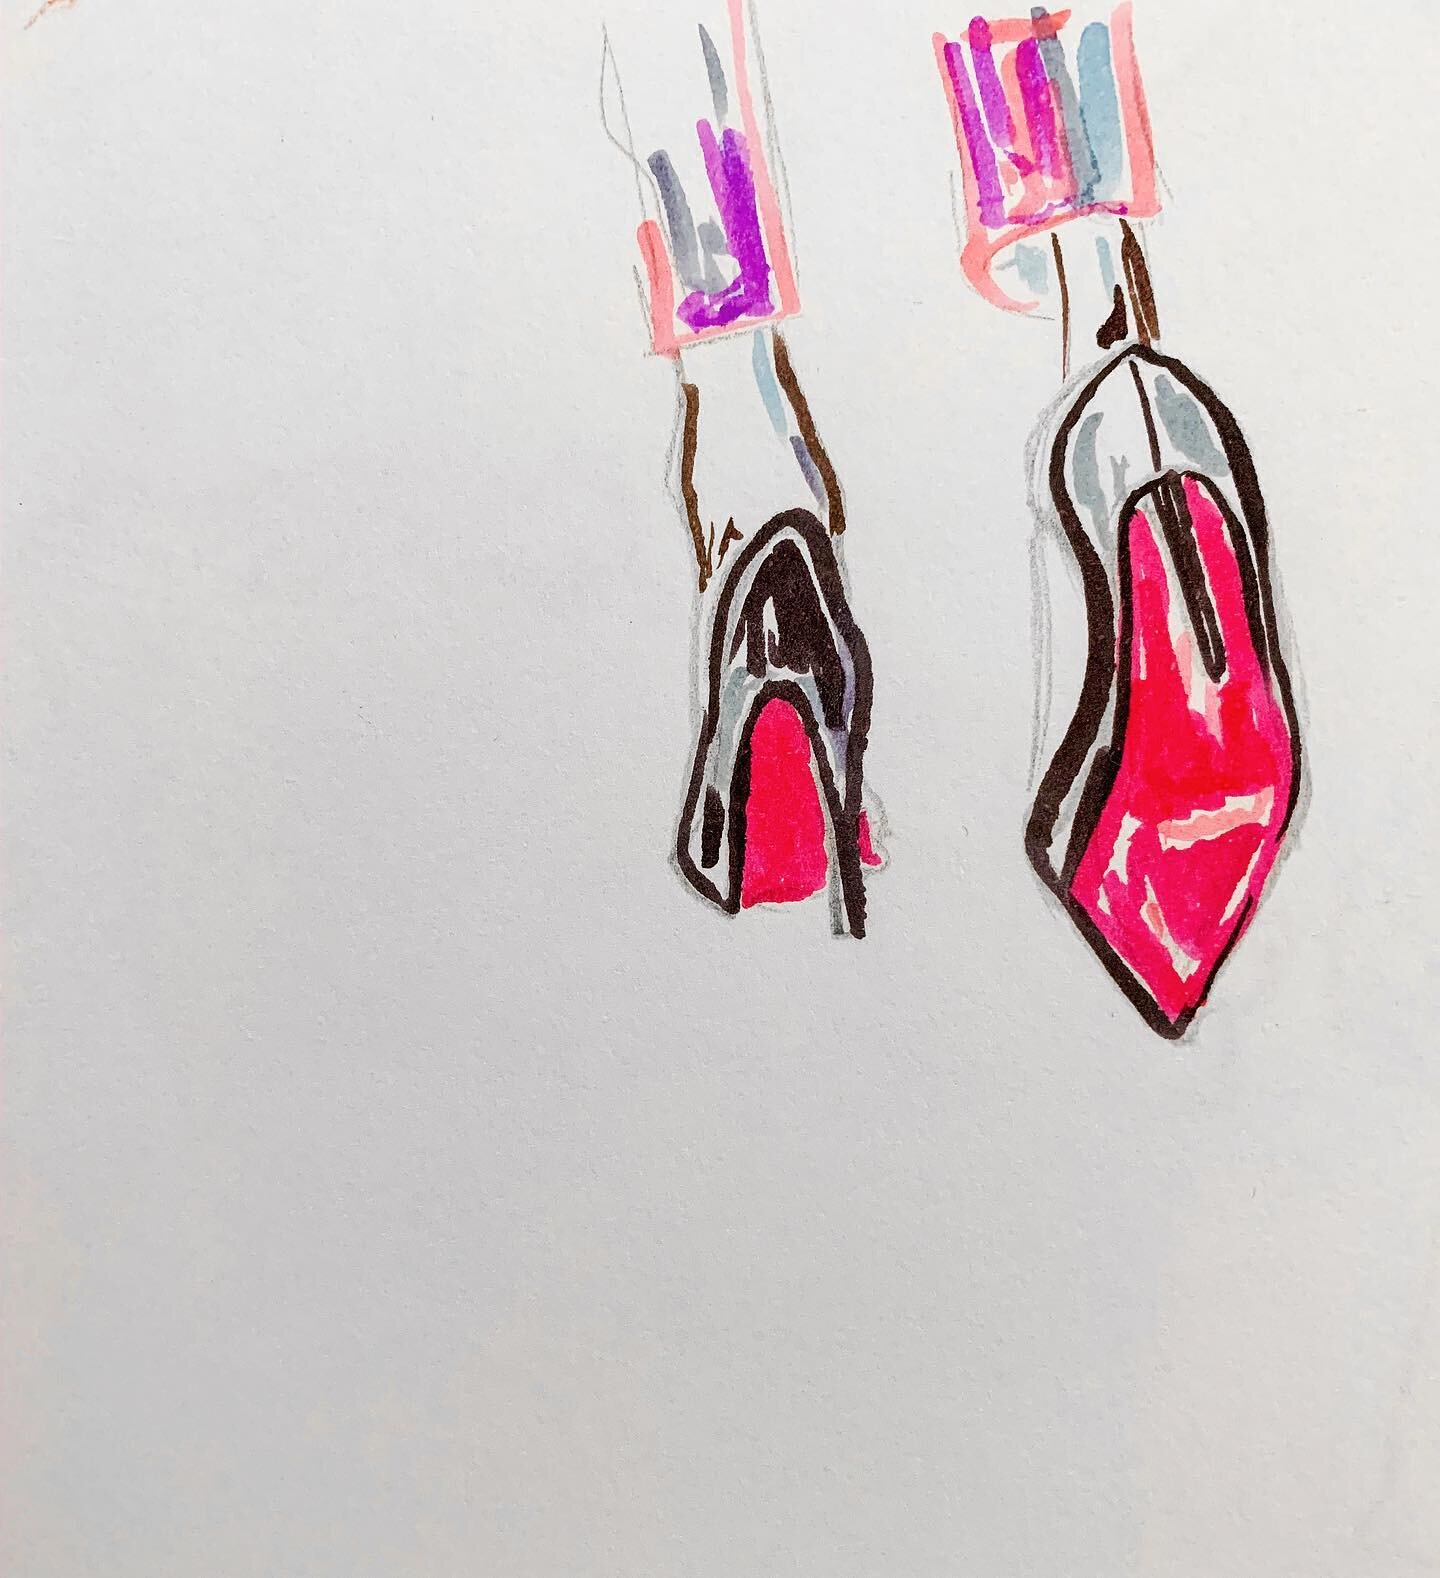 Close up

Materials: pens

#sketch #illustration #fashion #fashionillustration #artist #drawing #art #artistsoninstagram #artoftheday #shoes #heels #redbottoms #handdrawn #closeup